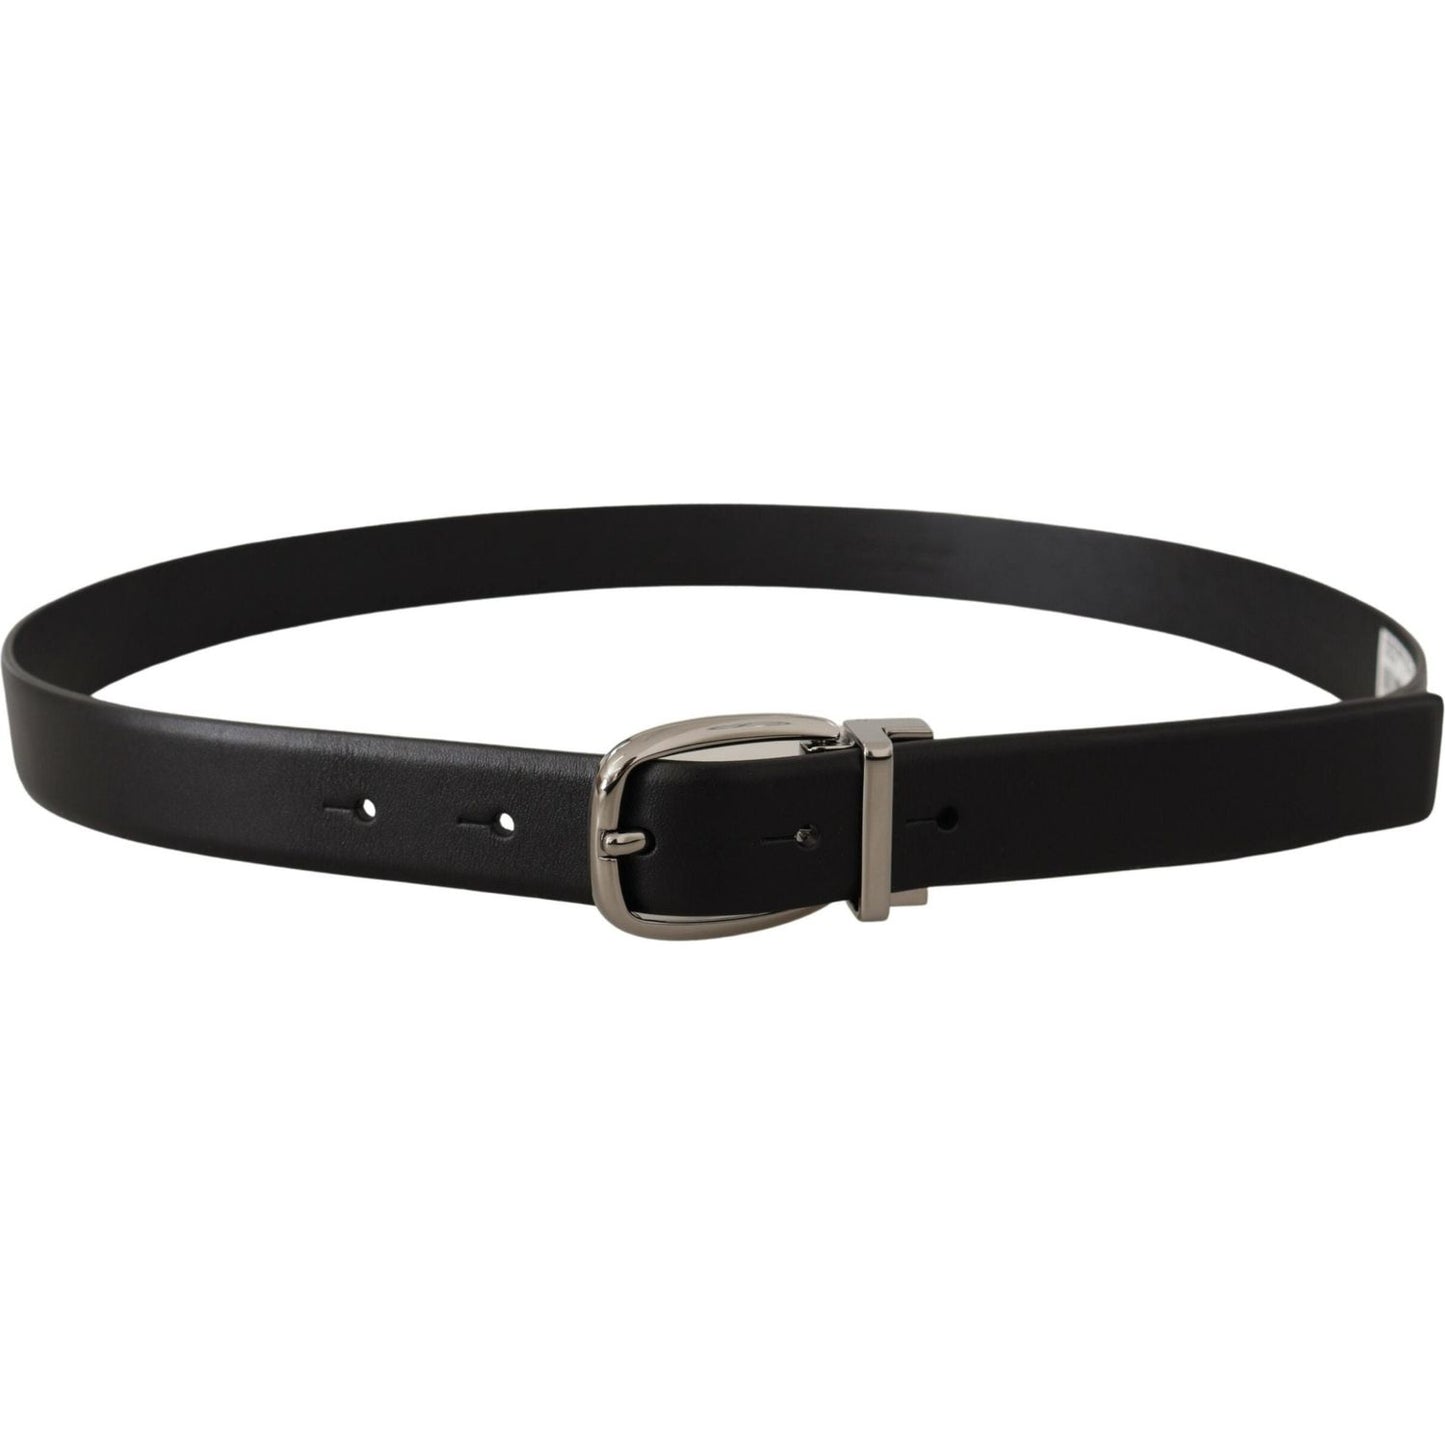 Dolce & Gabbana Elegant Leather Belt with Metal Buckle black-leather-silver-metal-chrome-logo-buckle-belt